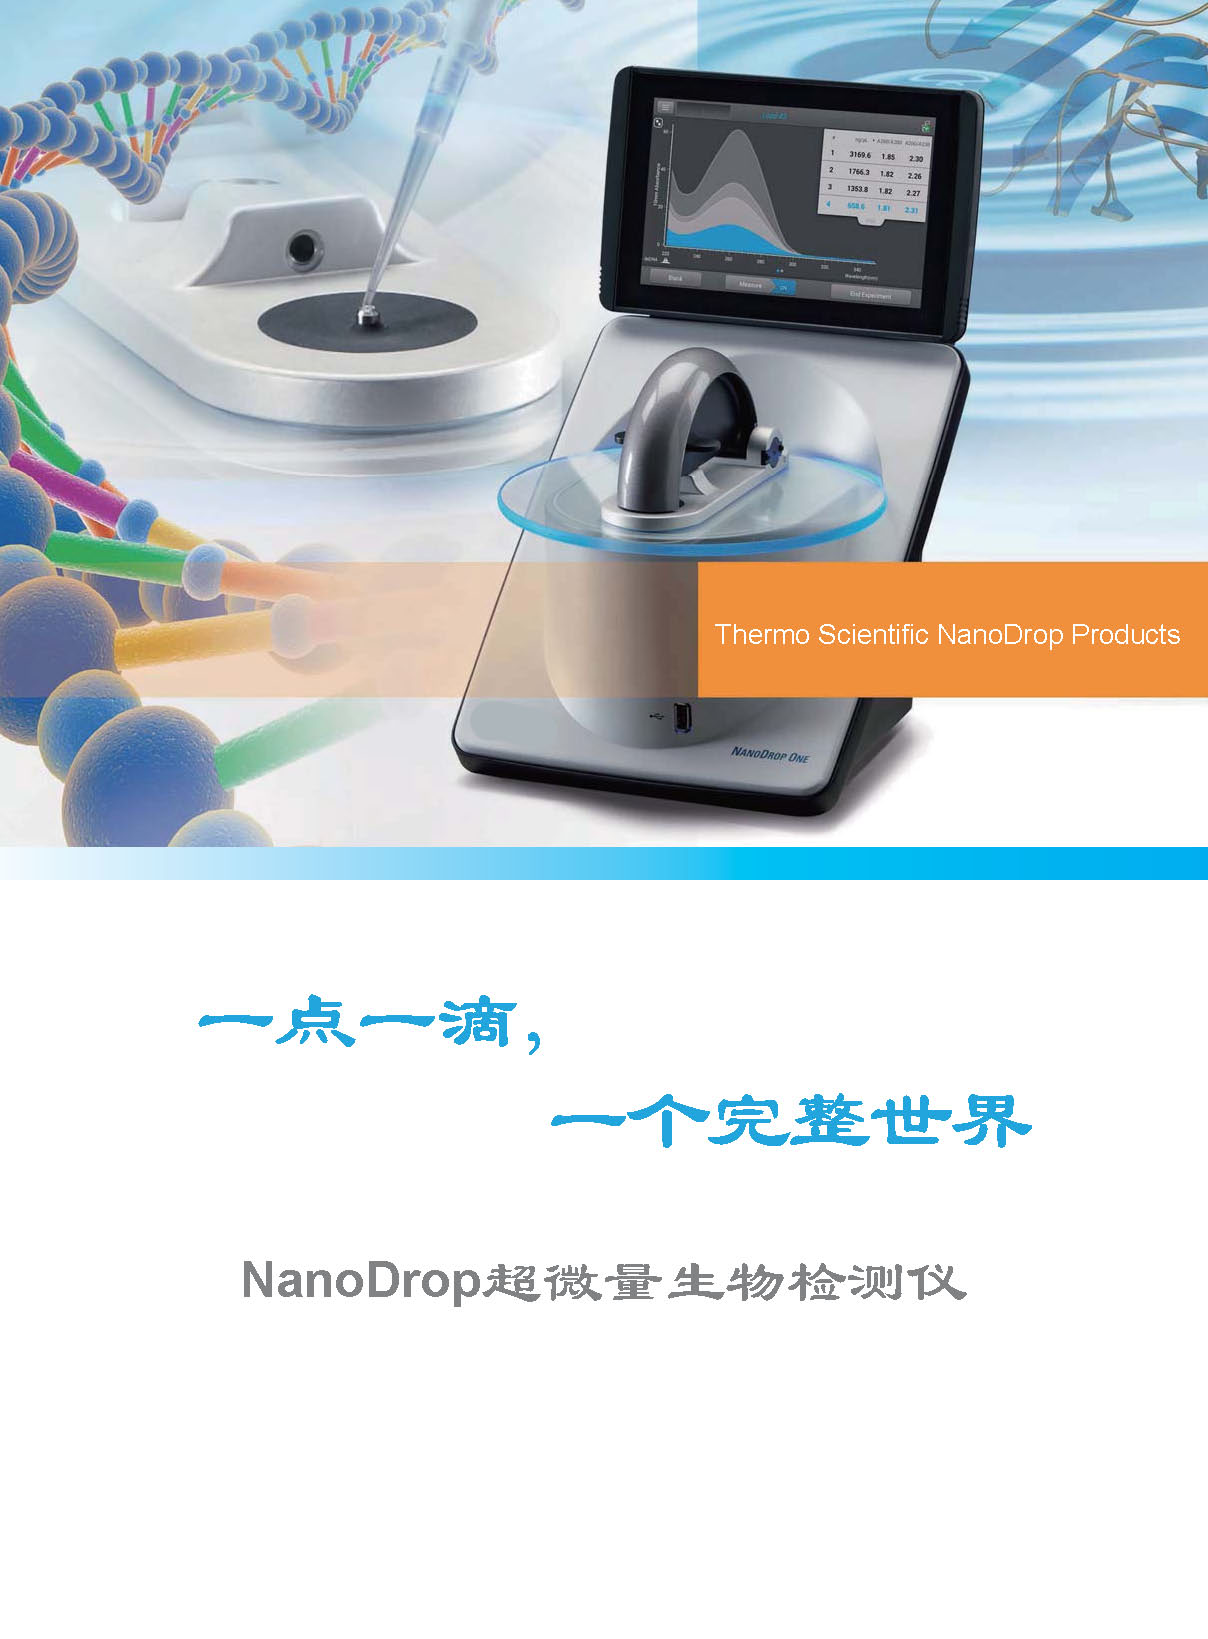 NanoDrop超微量生物检测仪